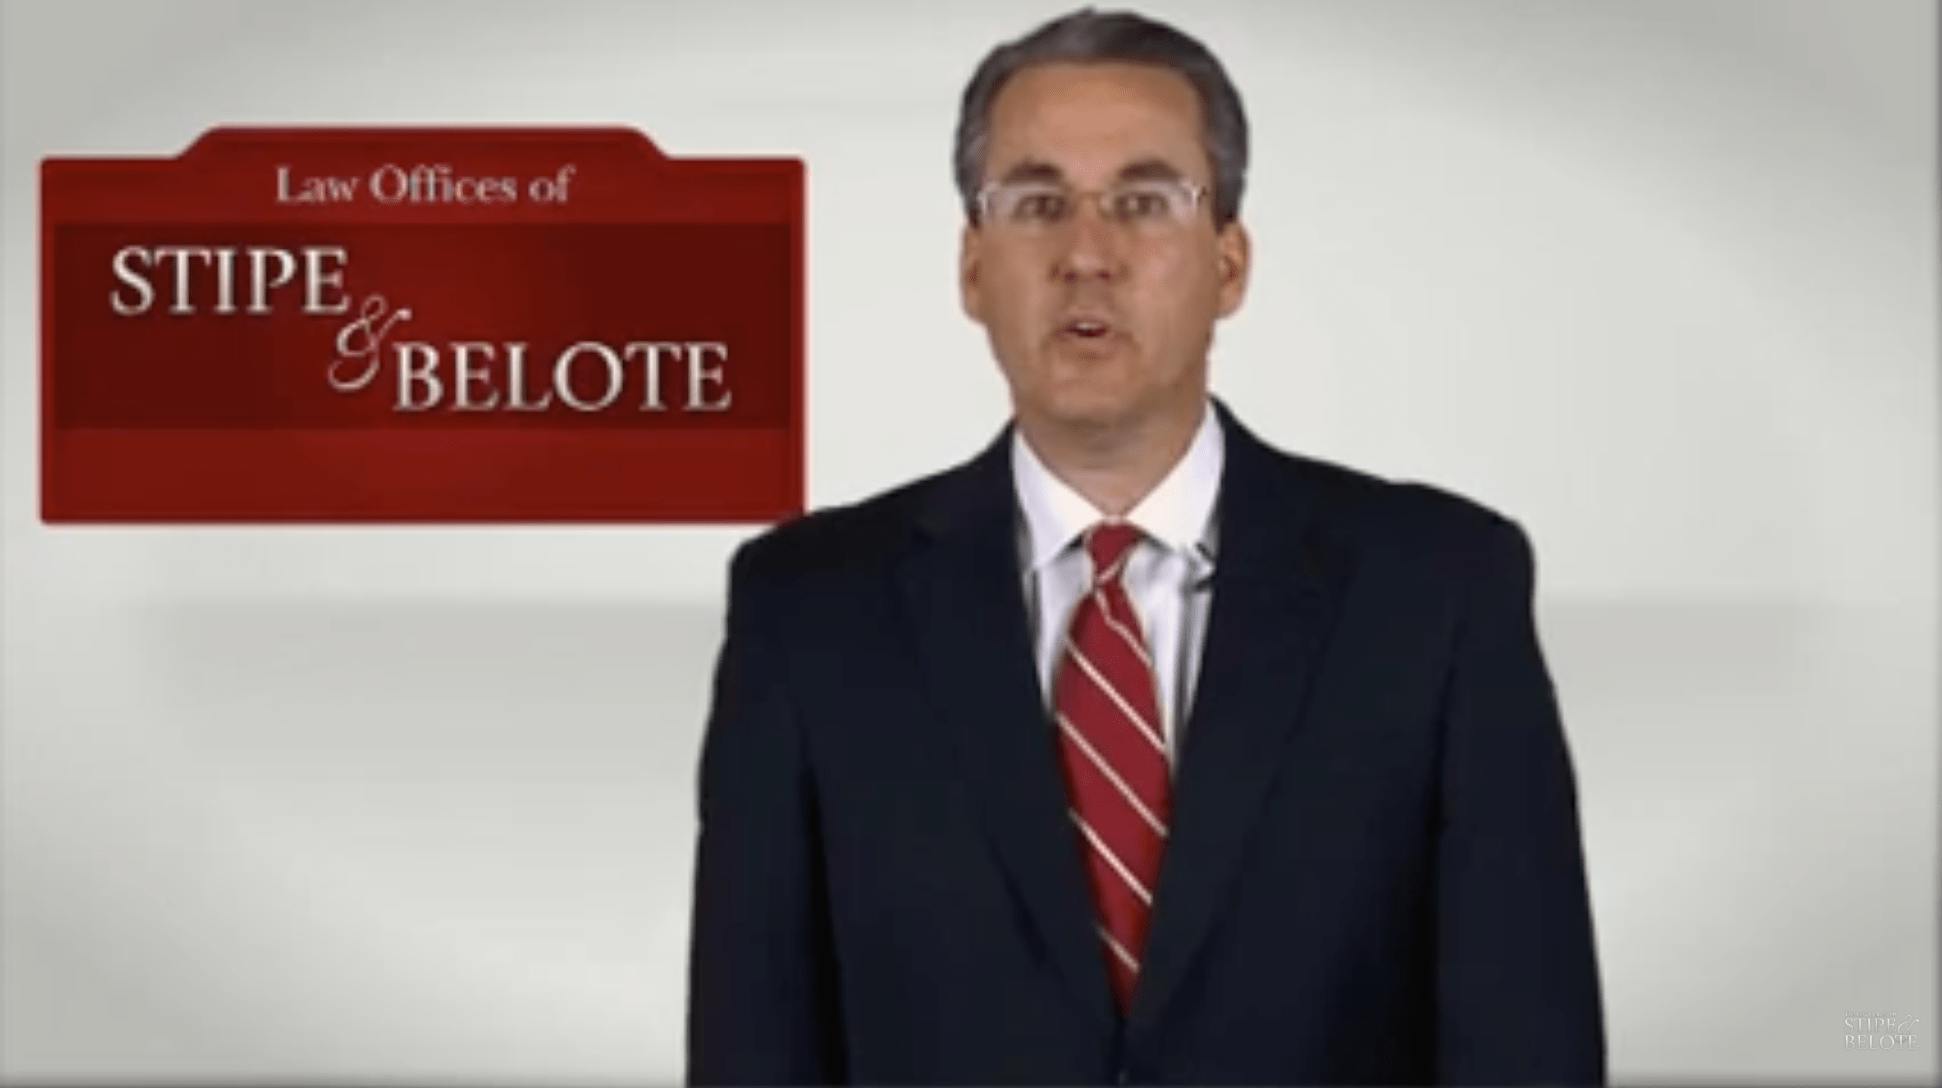 Belote, attorney, speaking in a youtube video